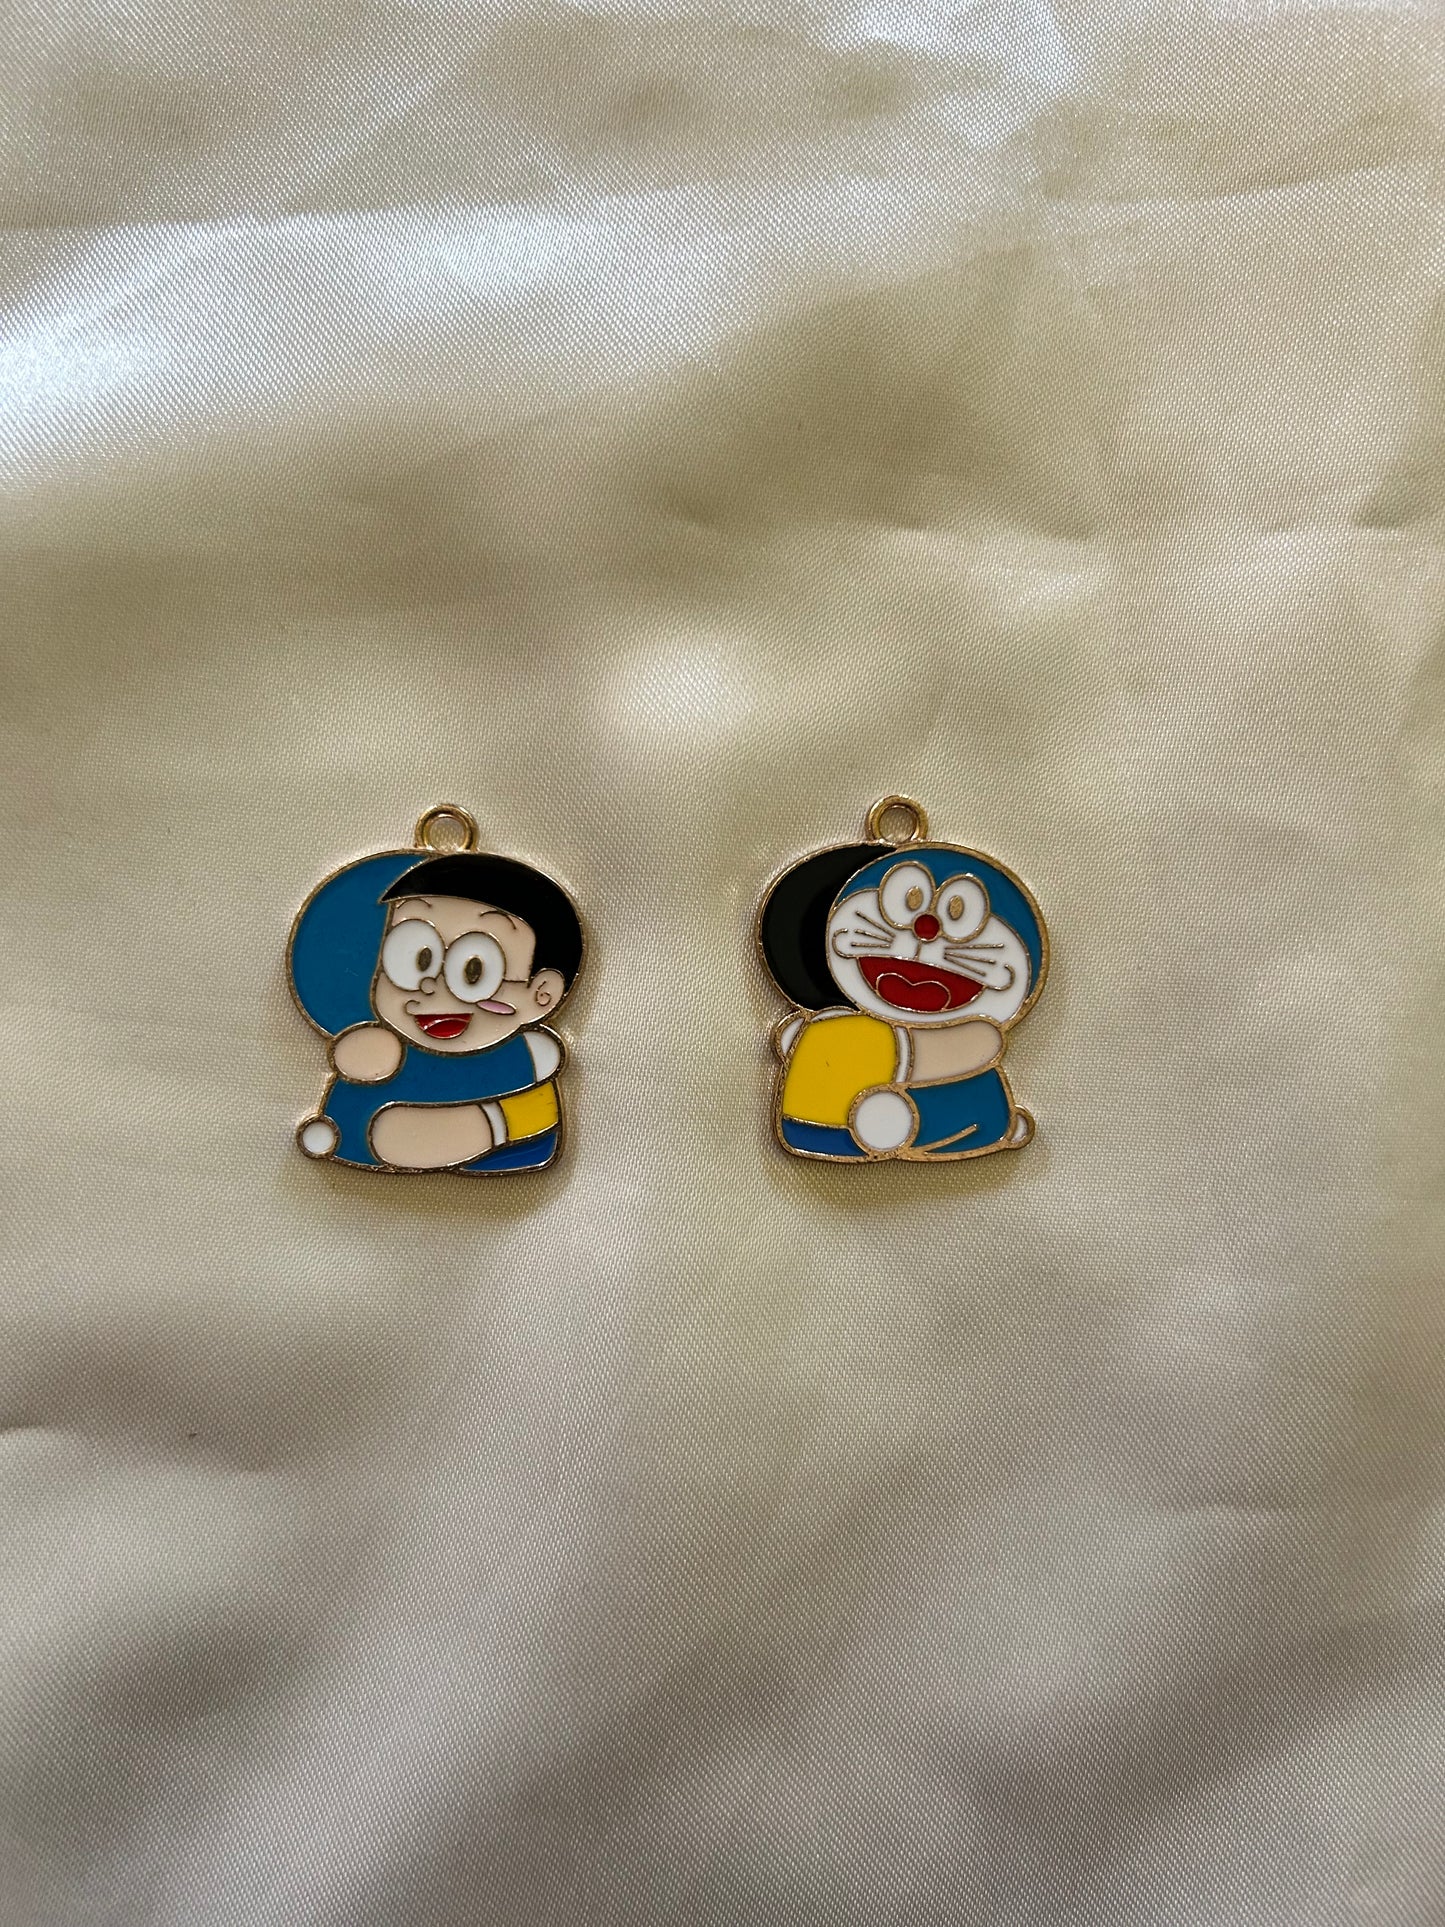 Doraemon two sided charm